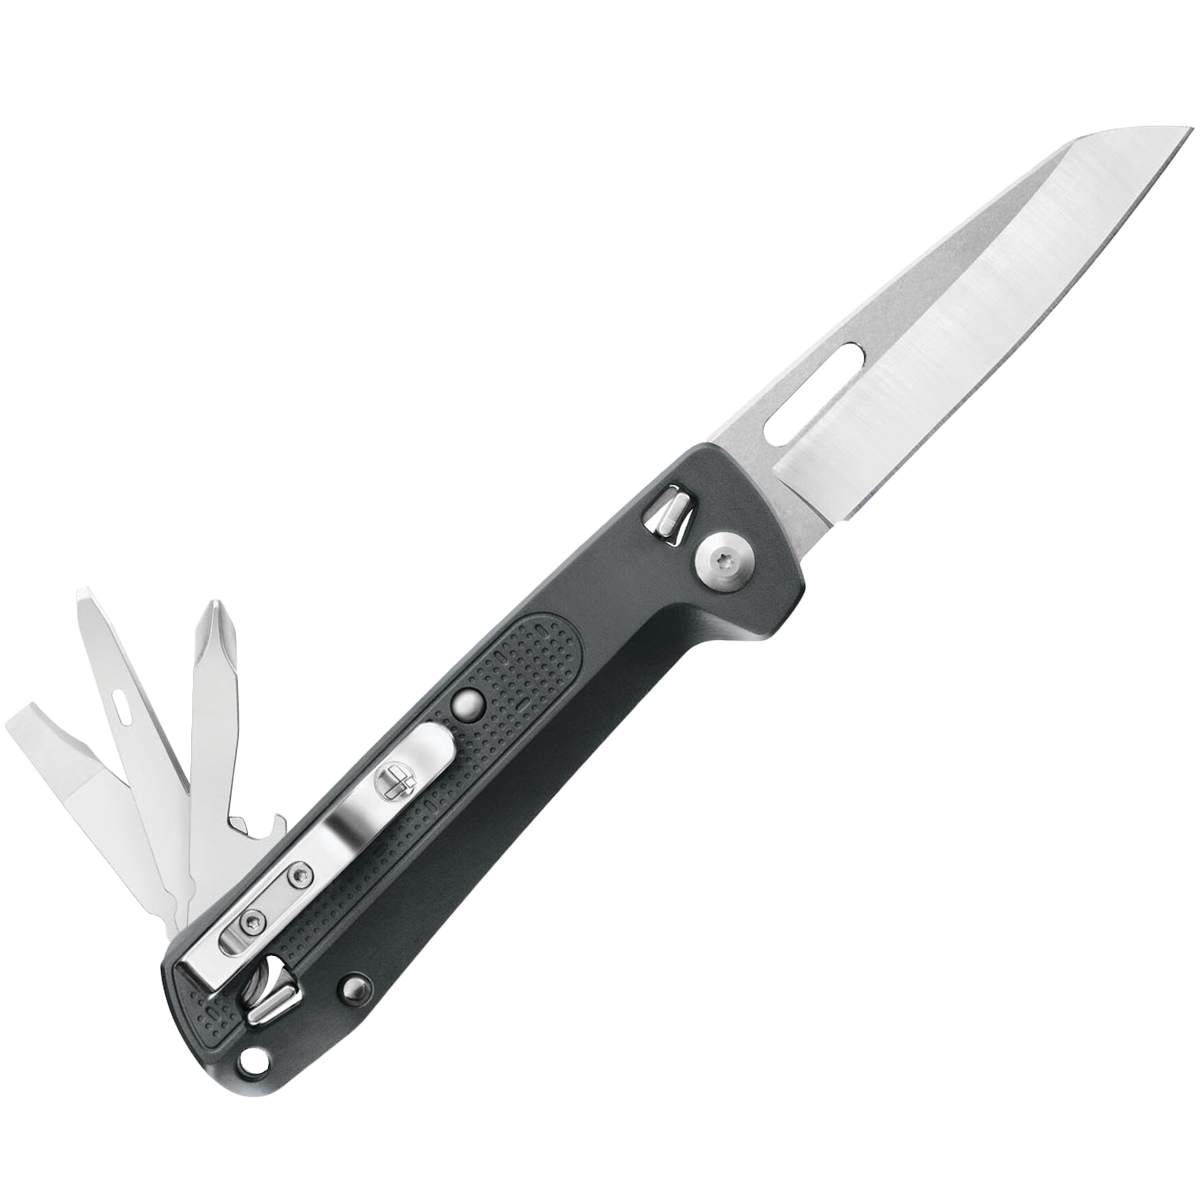 Free K2 Pocket Knife alternate view